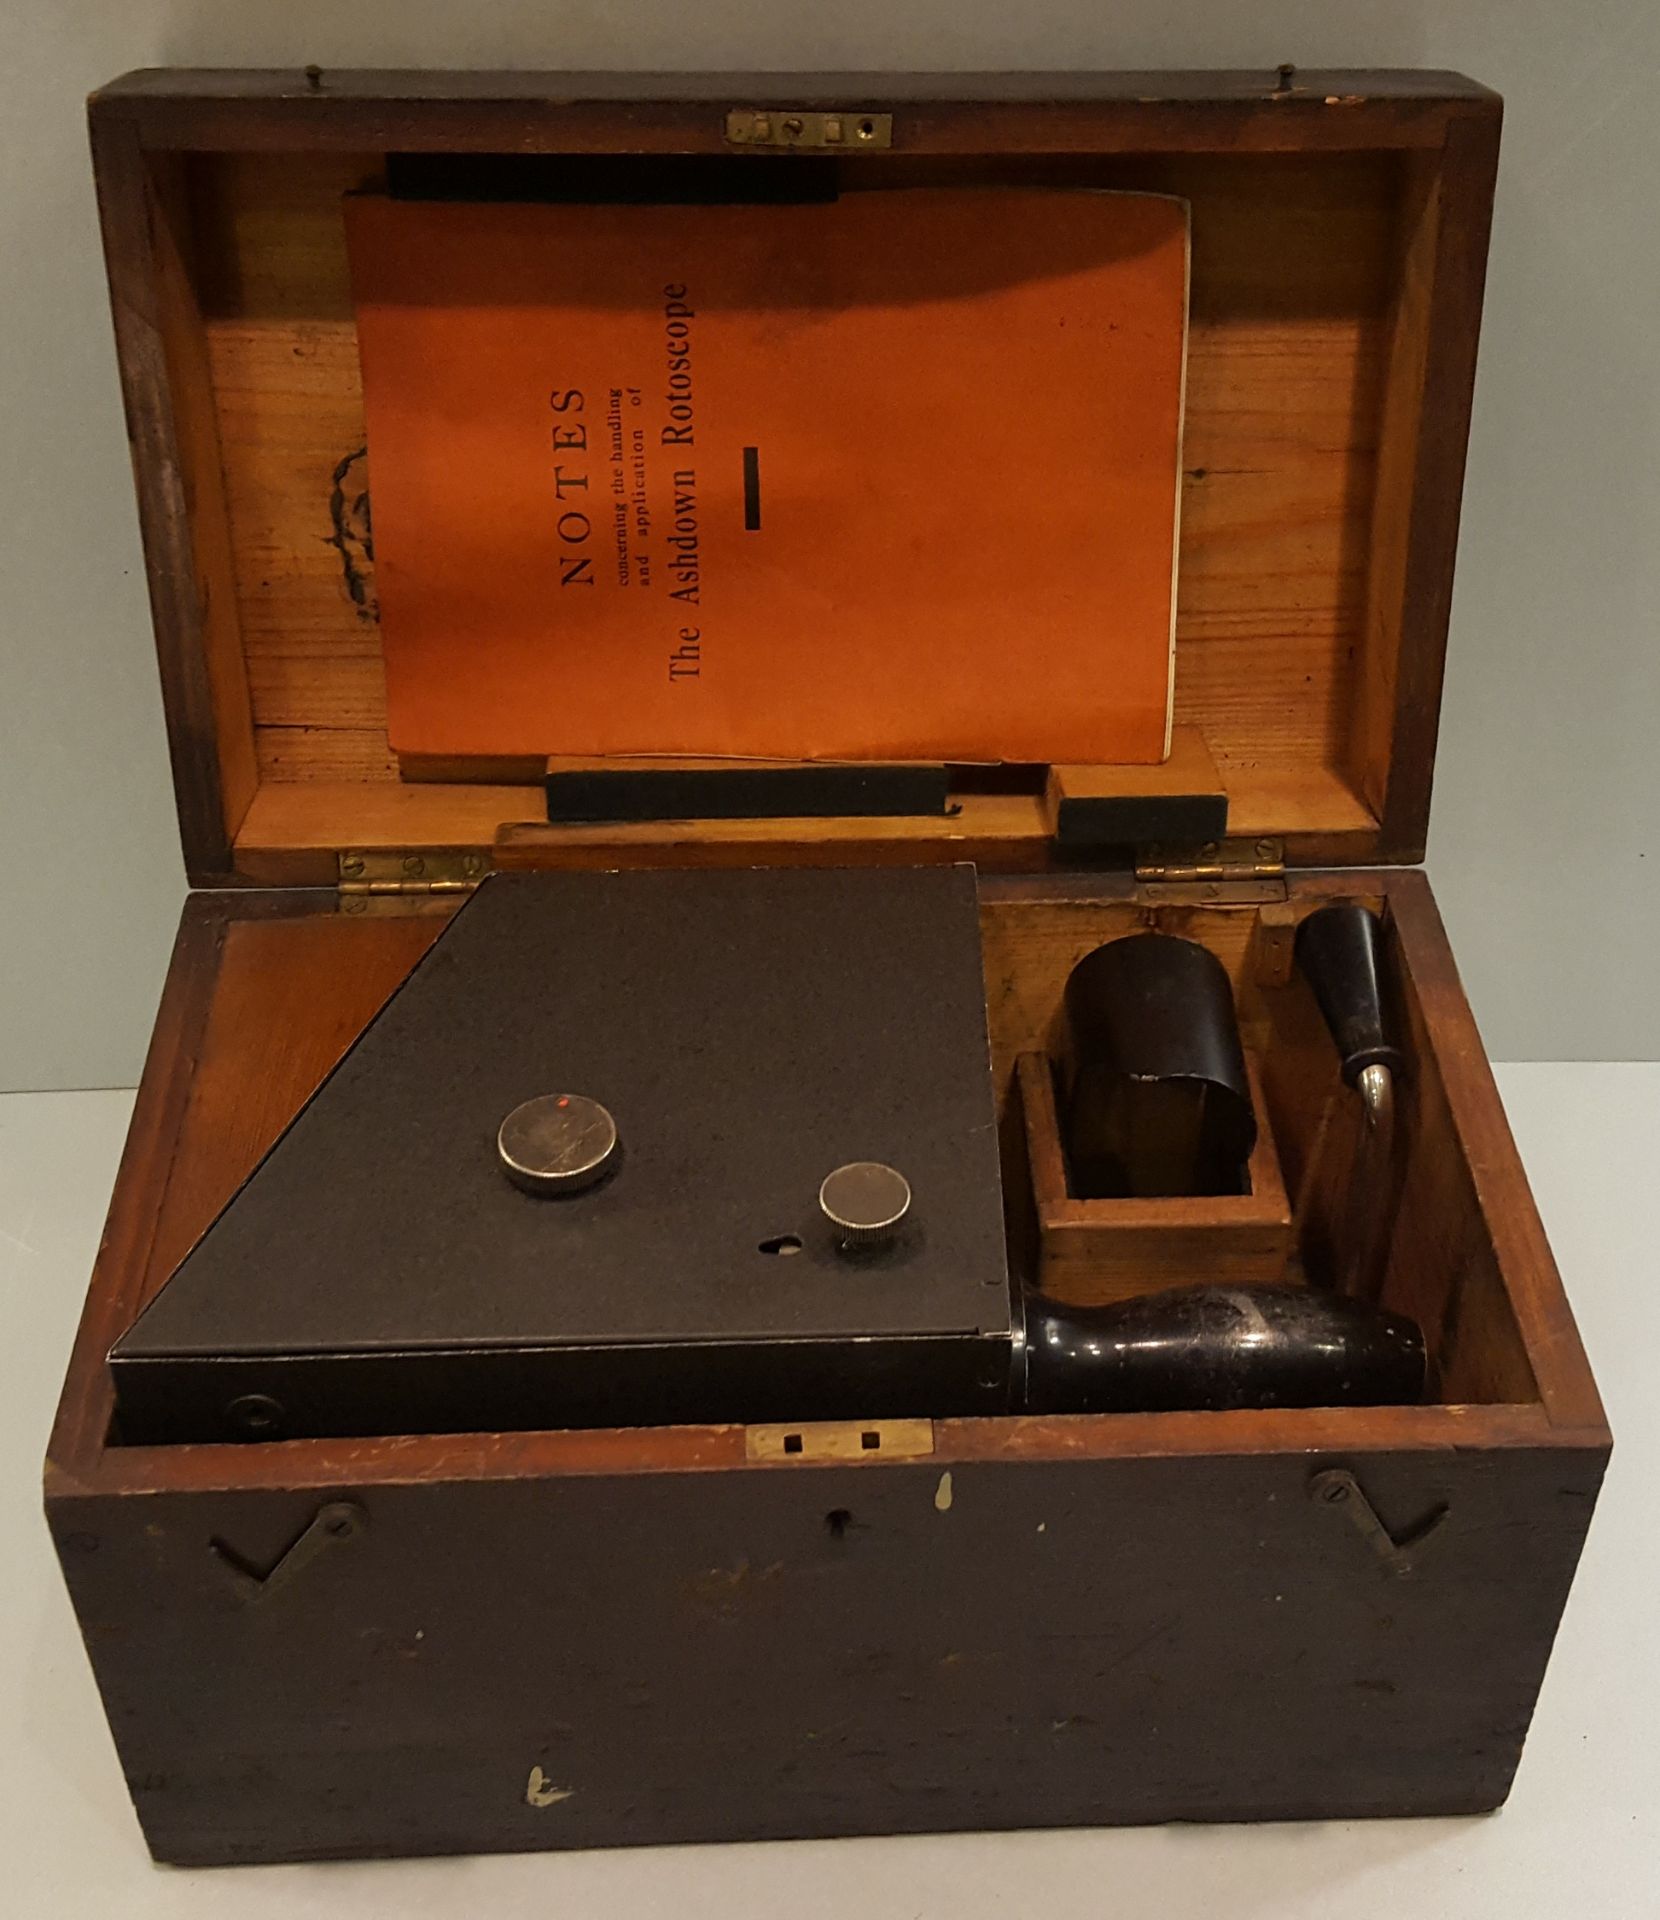 Vintage Retro Scientific Instrument The Ashdown Rotoscope In Original Box. - Image 2 of 3